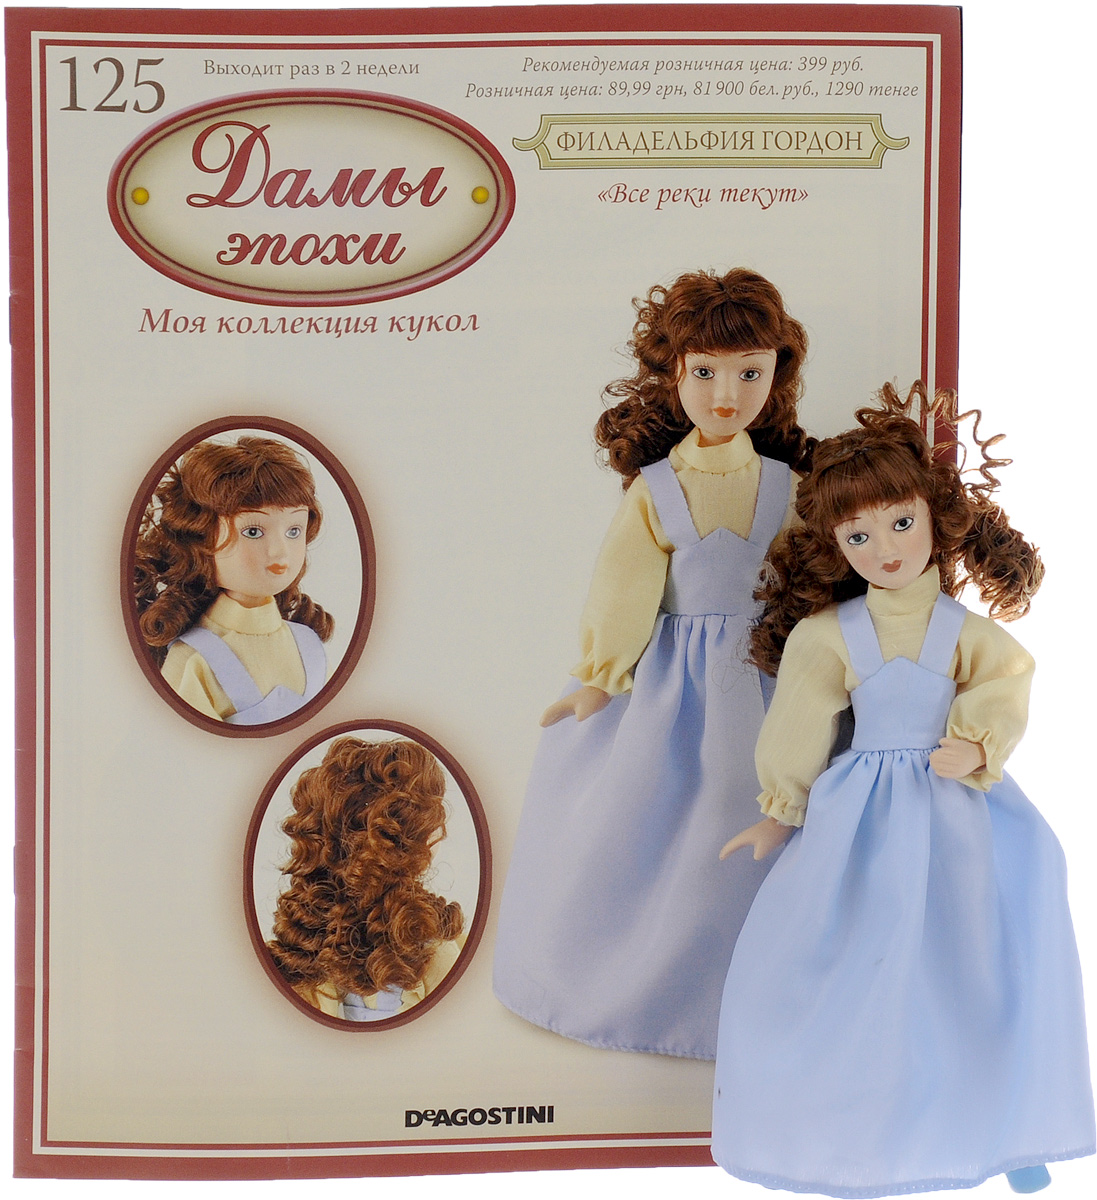 Купить куклу даму. Фарфоровые куклы с журналом дамы эпохи. Куклы ДЕАГОСТИНИ дамы эпохи коллекция. Кукла Джейн Остин дамы эпохи. Куклы дамы эпохи ДЕАГОСТИНИ вся коллекция.